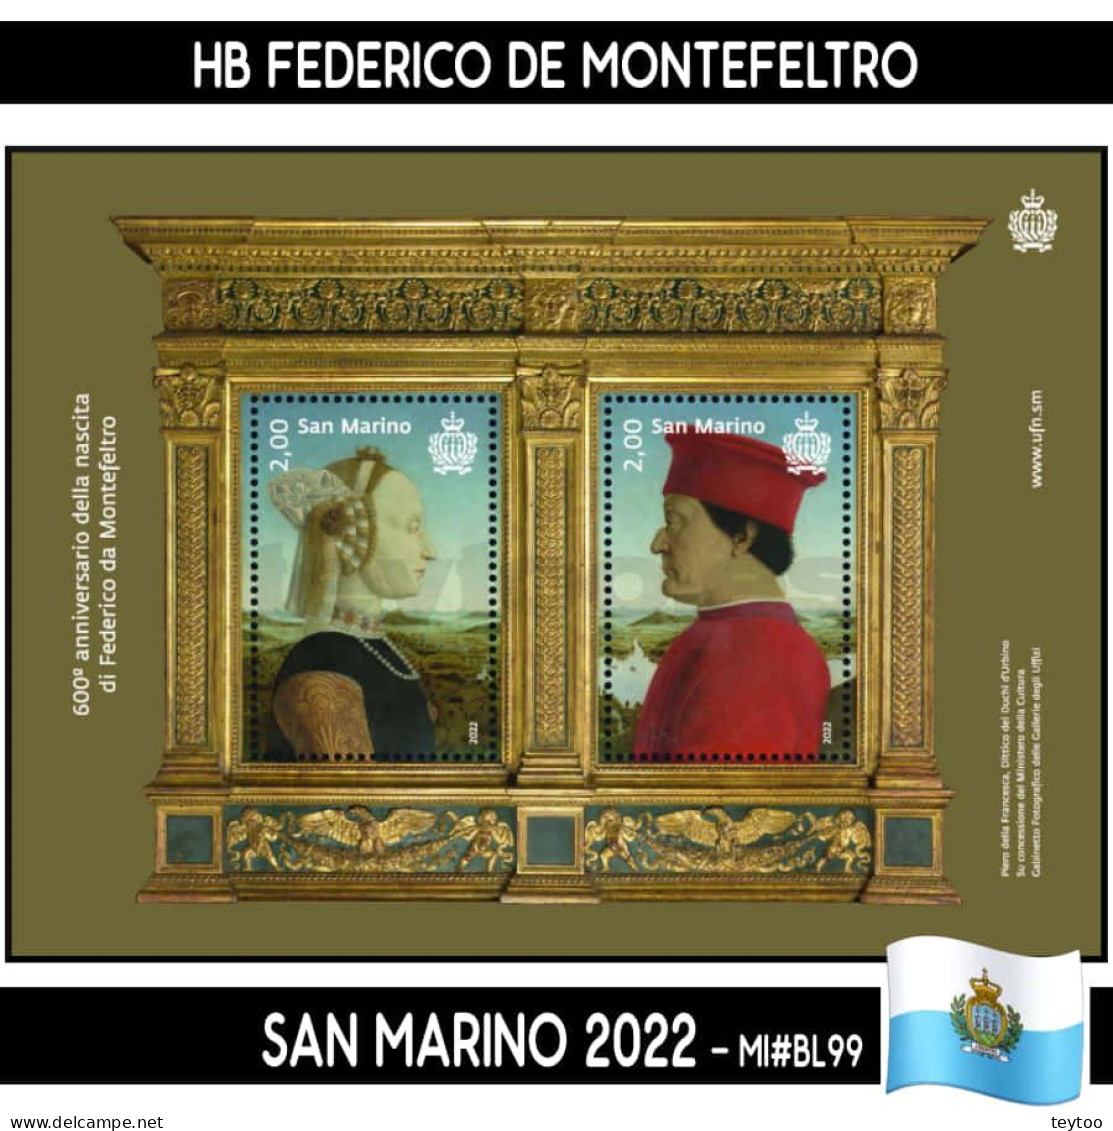 B0933# San Marino 2022. HB Federico De Montefeltro (MNH) MI#BL99 - Nuevos